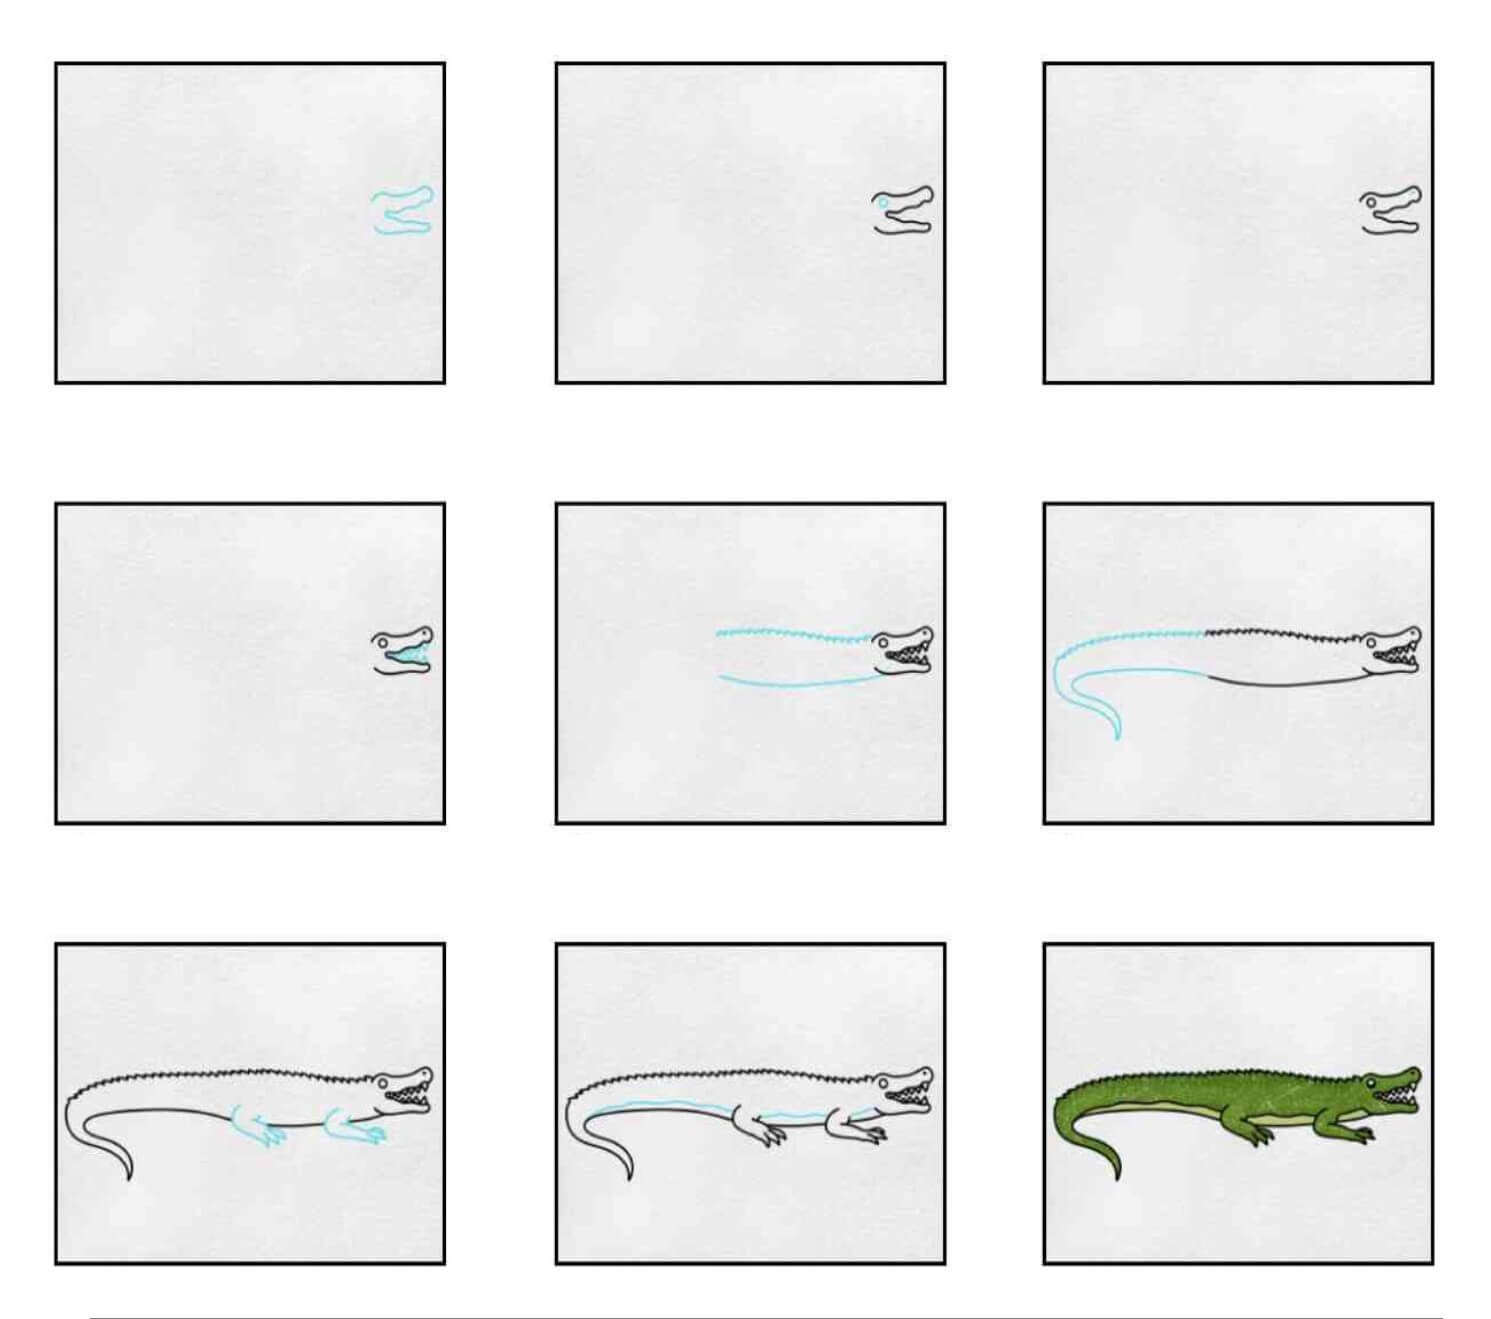 Alligator idea (6) Drawing Ideas